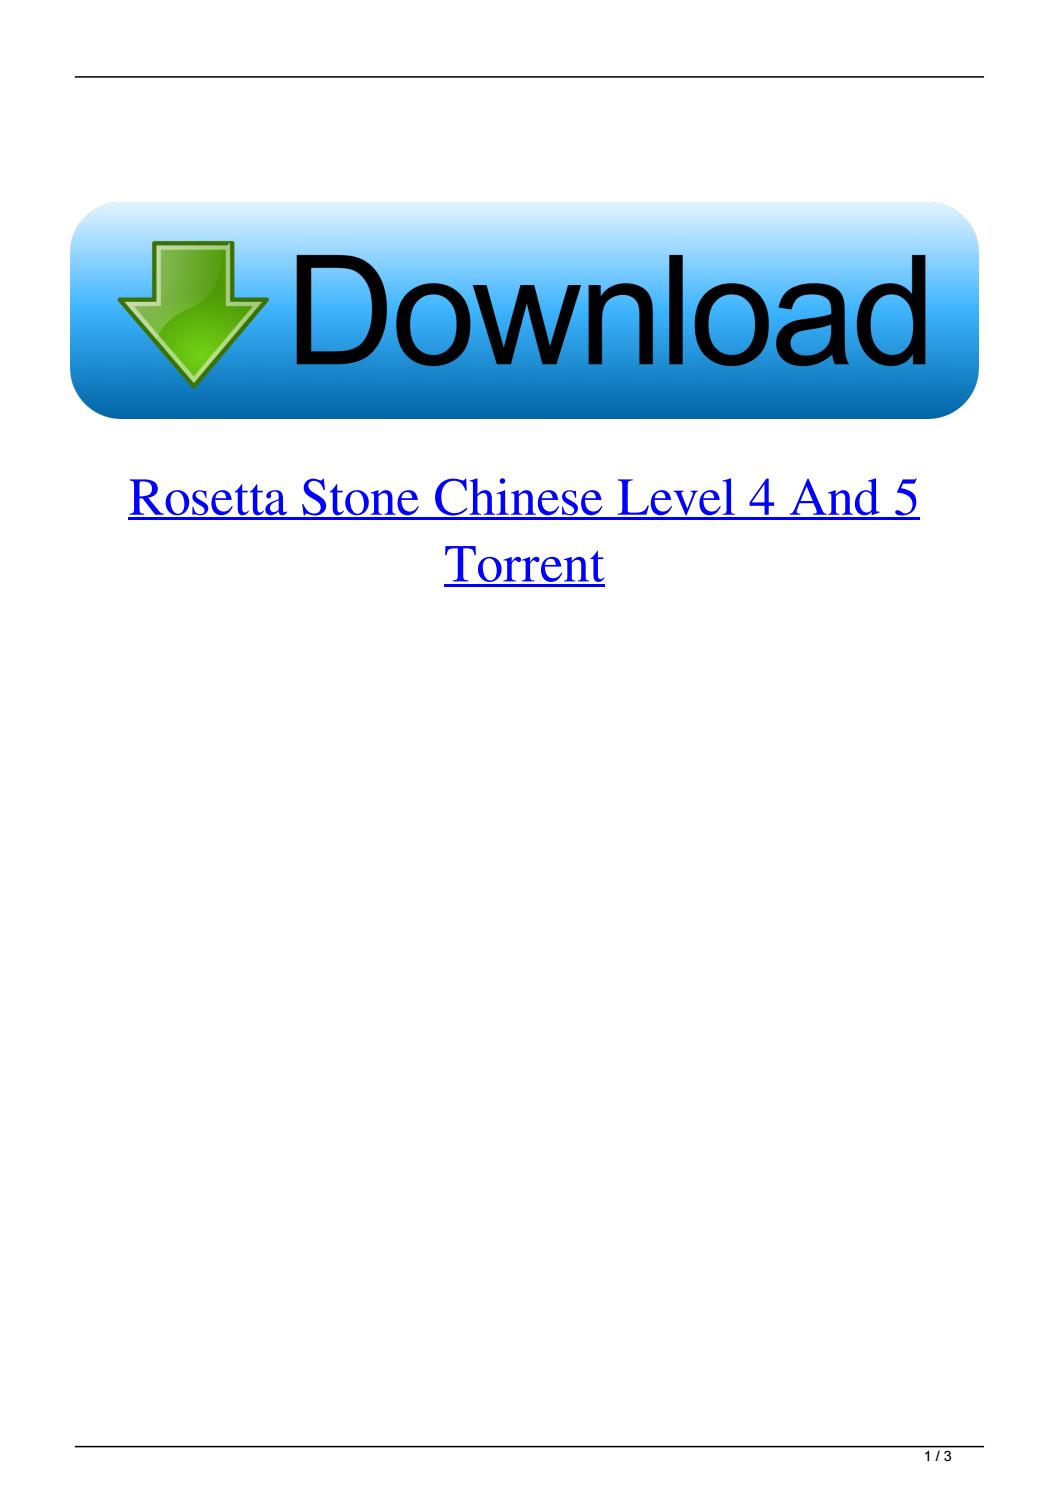 Download Rosetta Stone 4 Mac Torrent